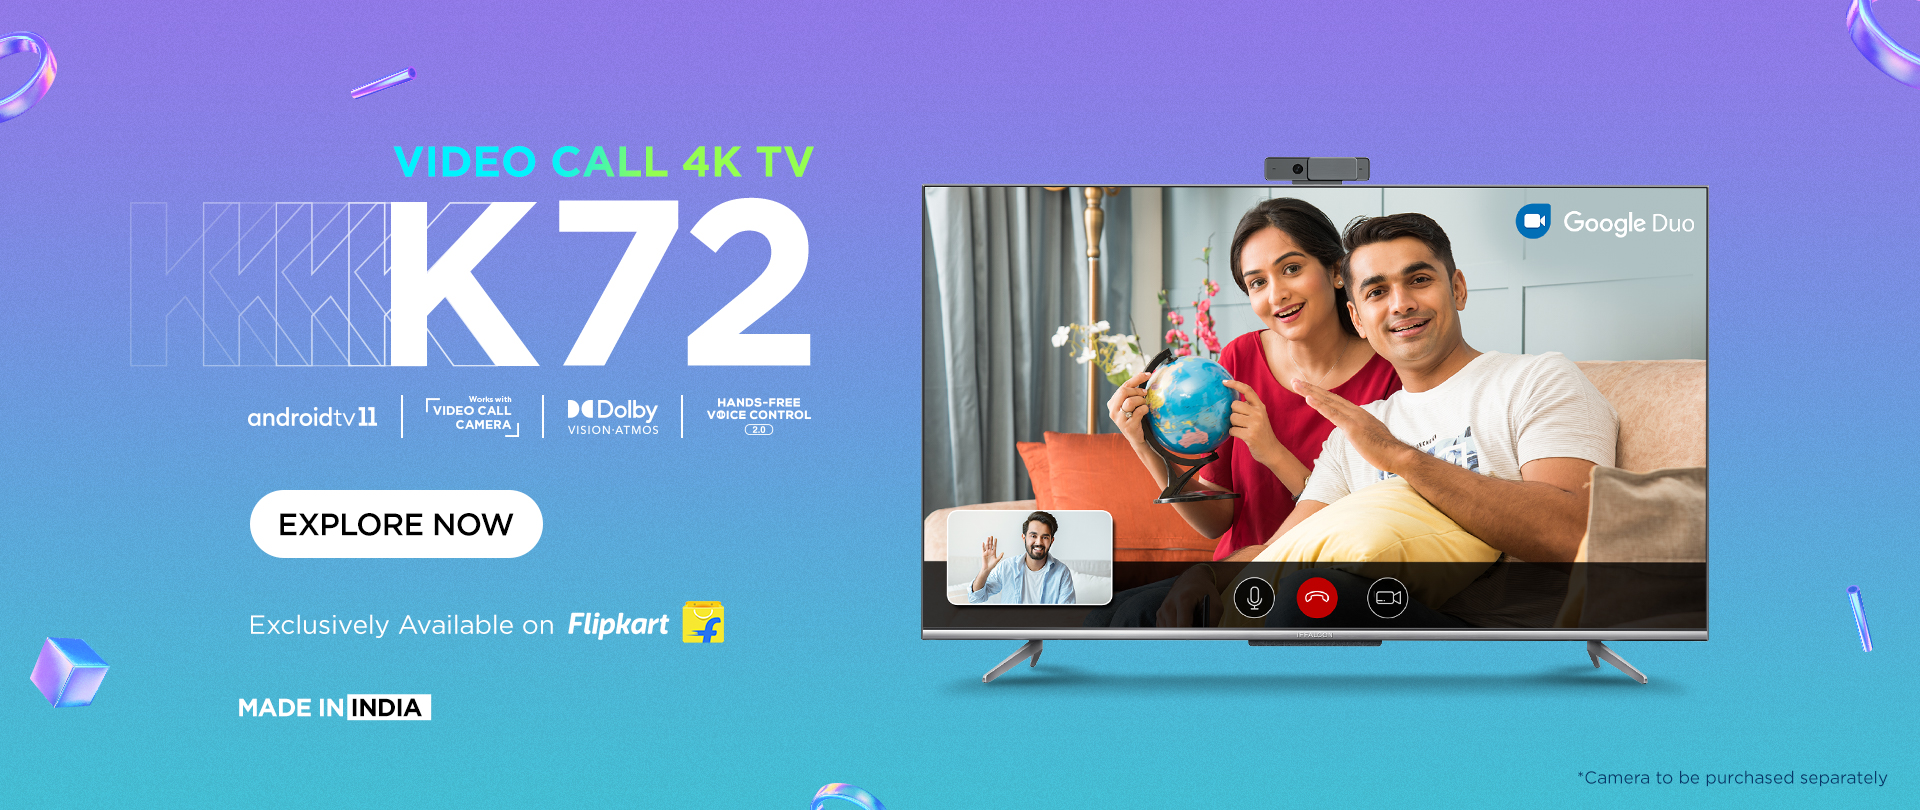 iFFALCON K72 Video Call 4K TV